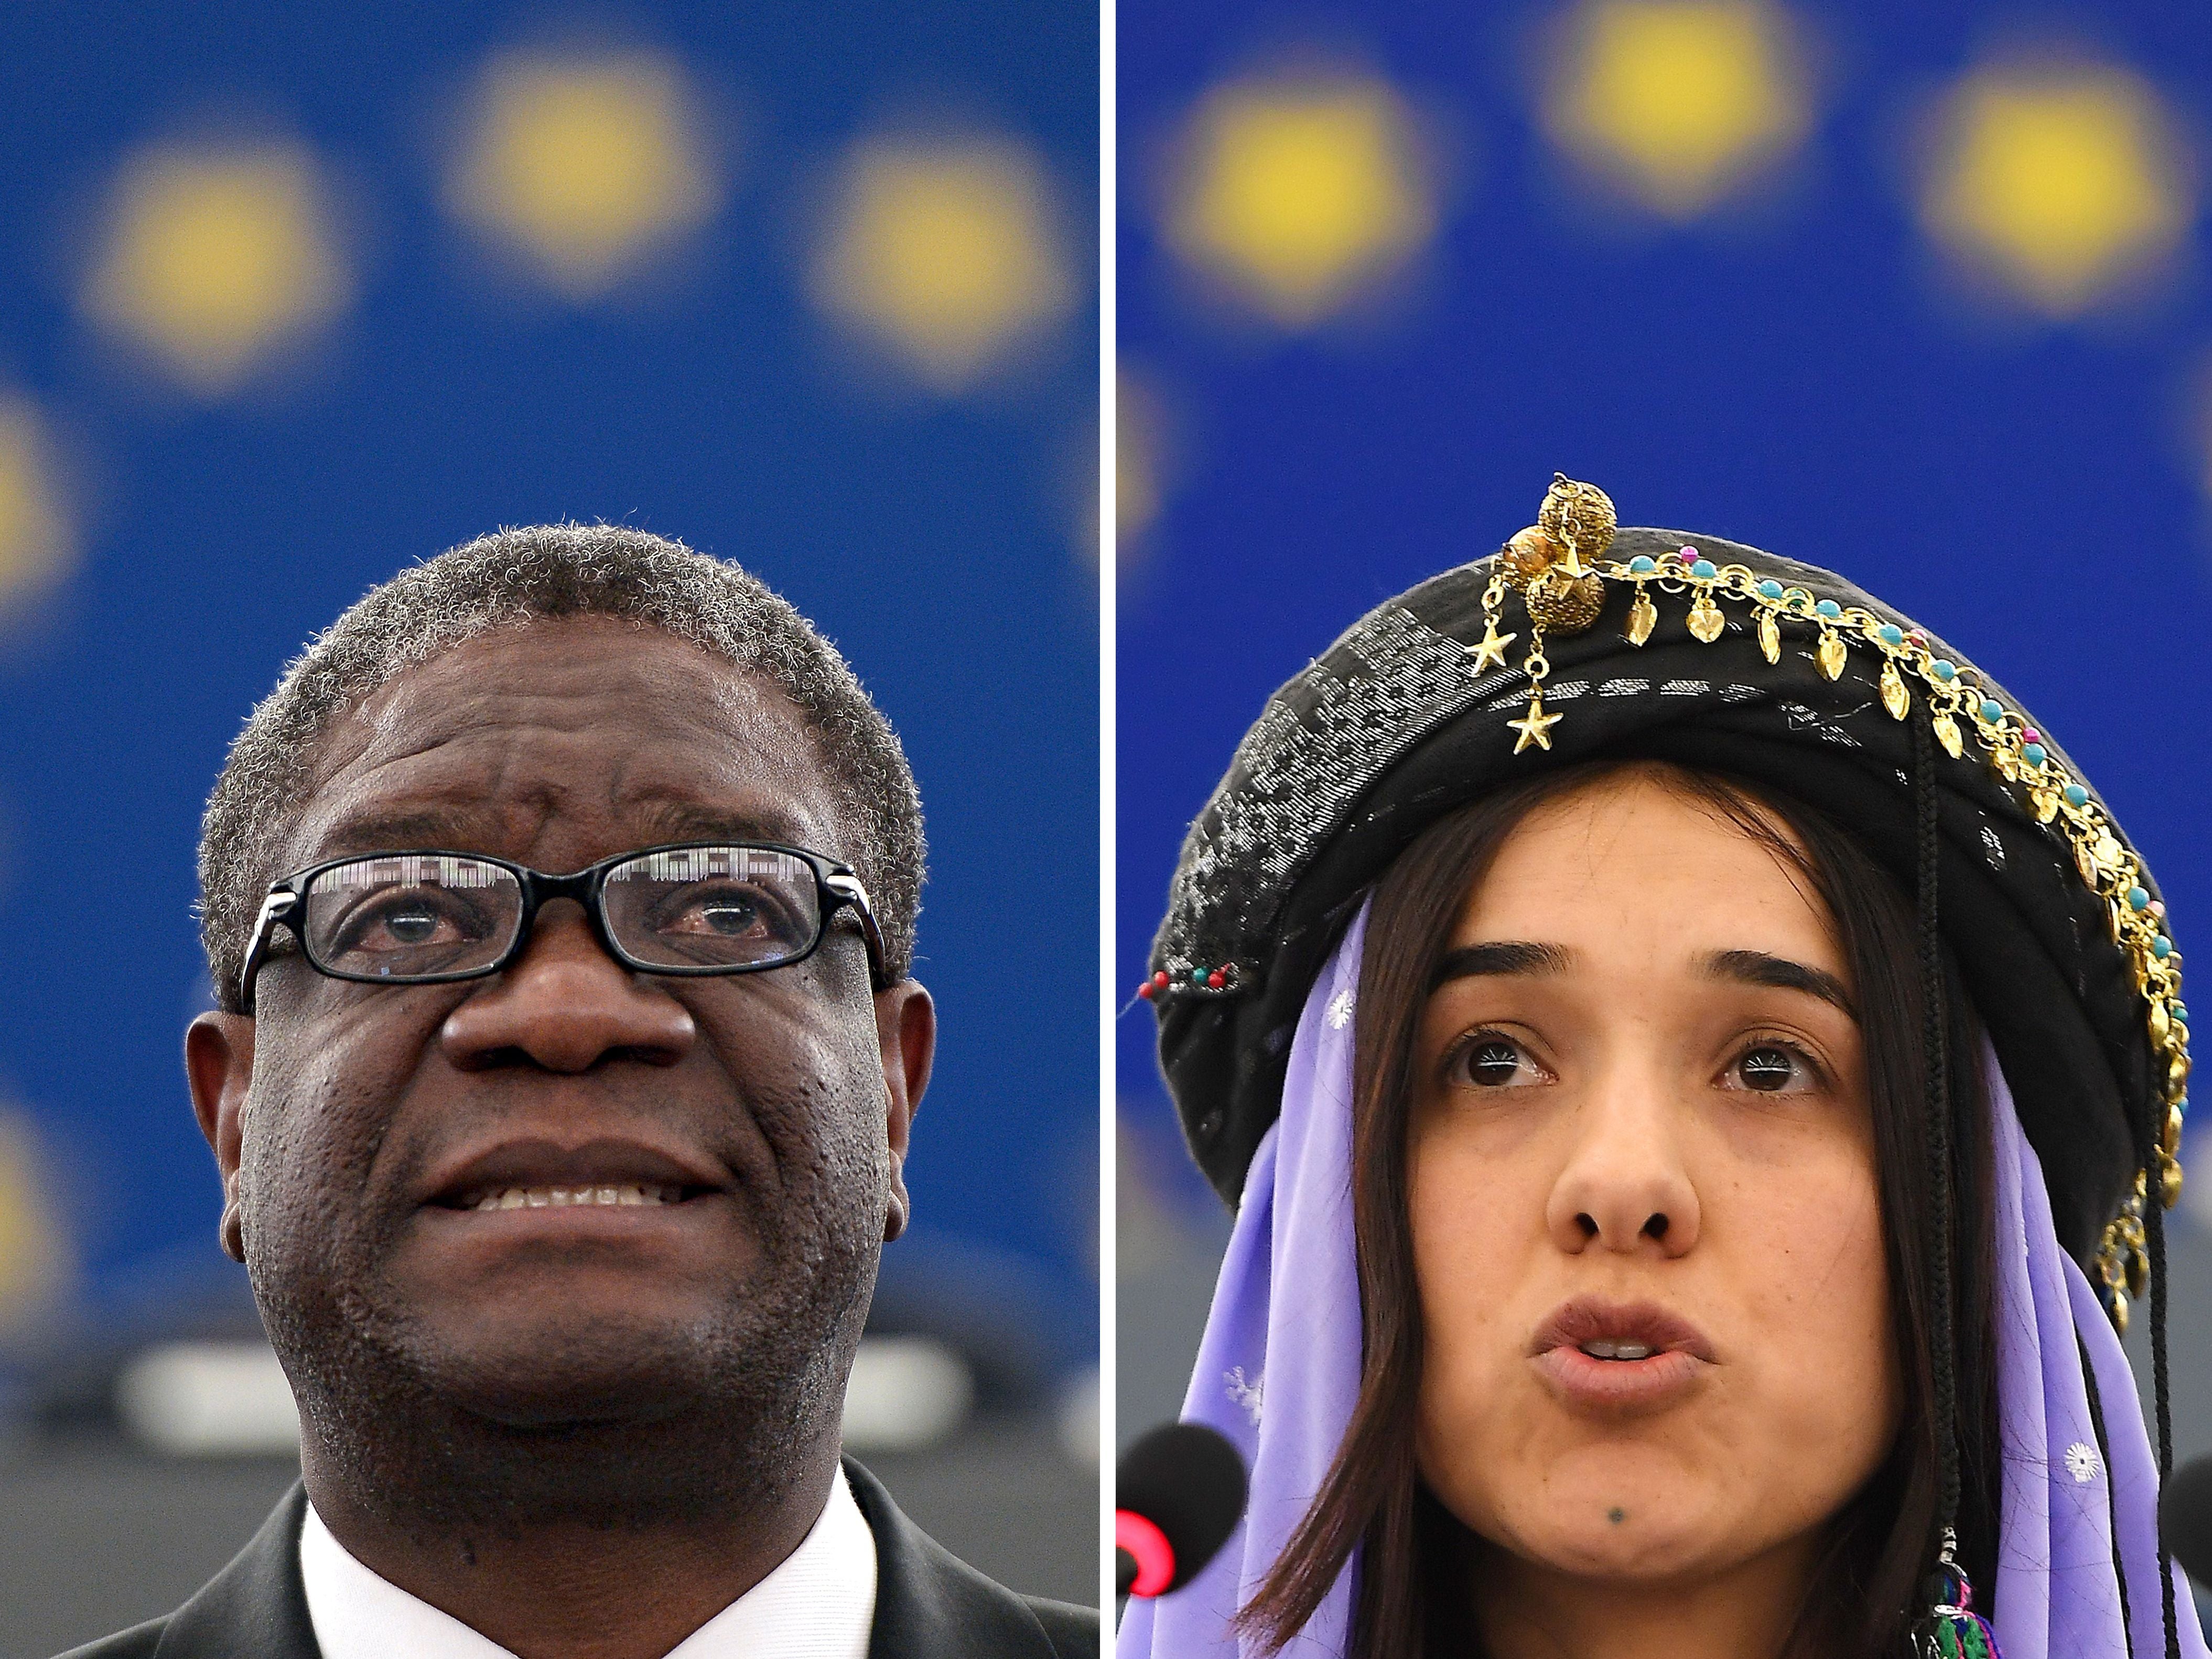 Denis Mukwege And Nadia Murad Win Nobel Peace Prize For Their Work Against Sexual Violence